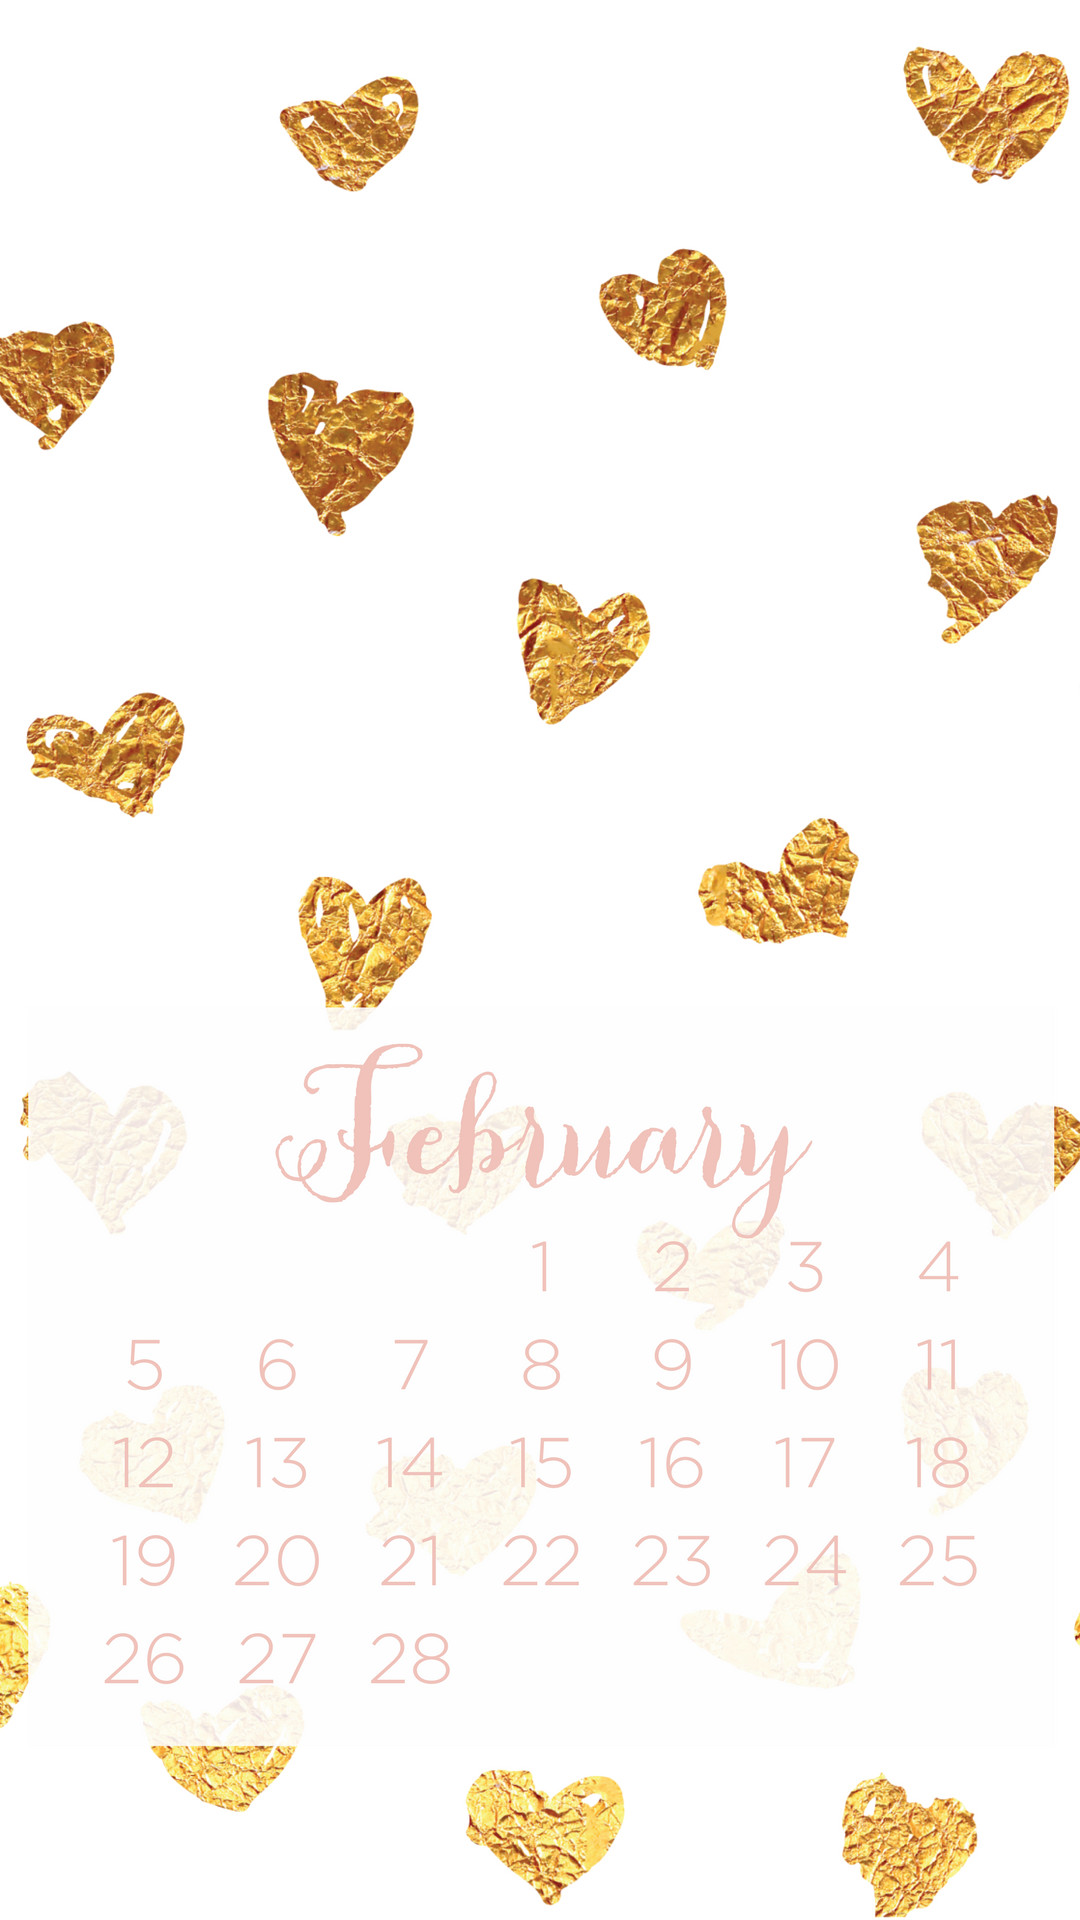 1080x1920 Click to download the foil heart February calendar wallpaper.